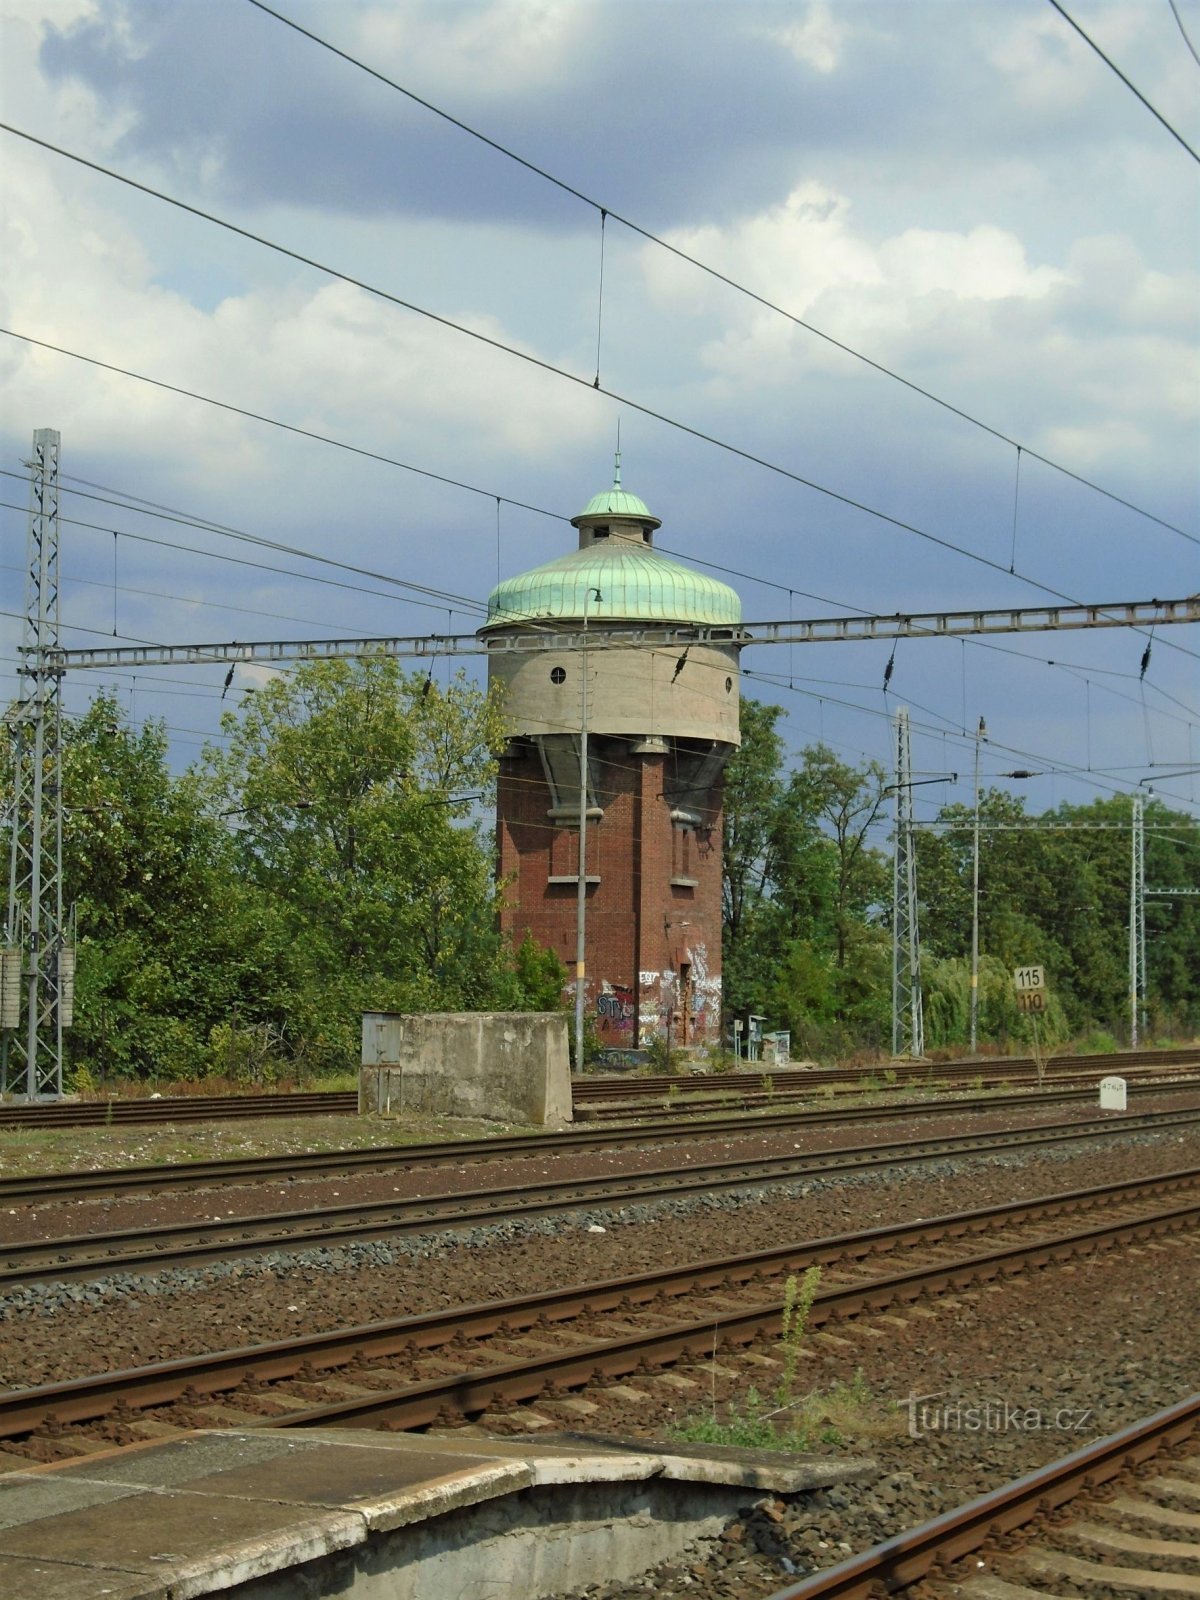 Stationstornreservoar (Roudnice nad Labem, 23.7.2018/XNUMX/XNUMX)